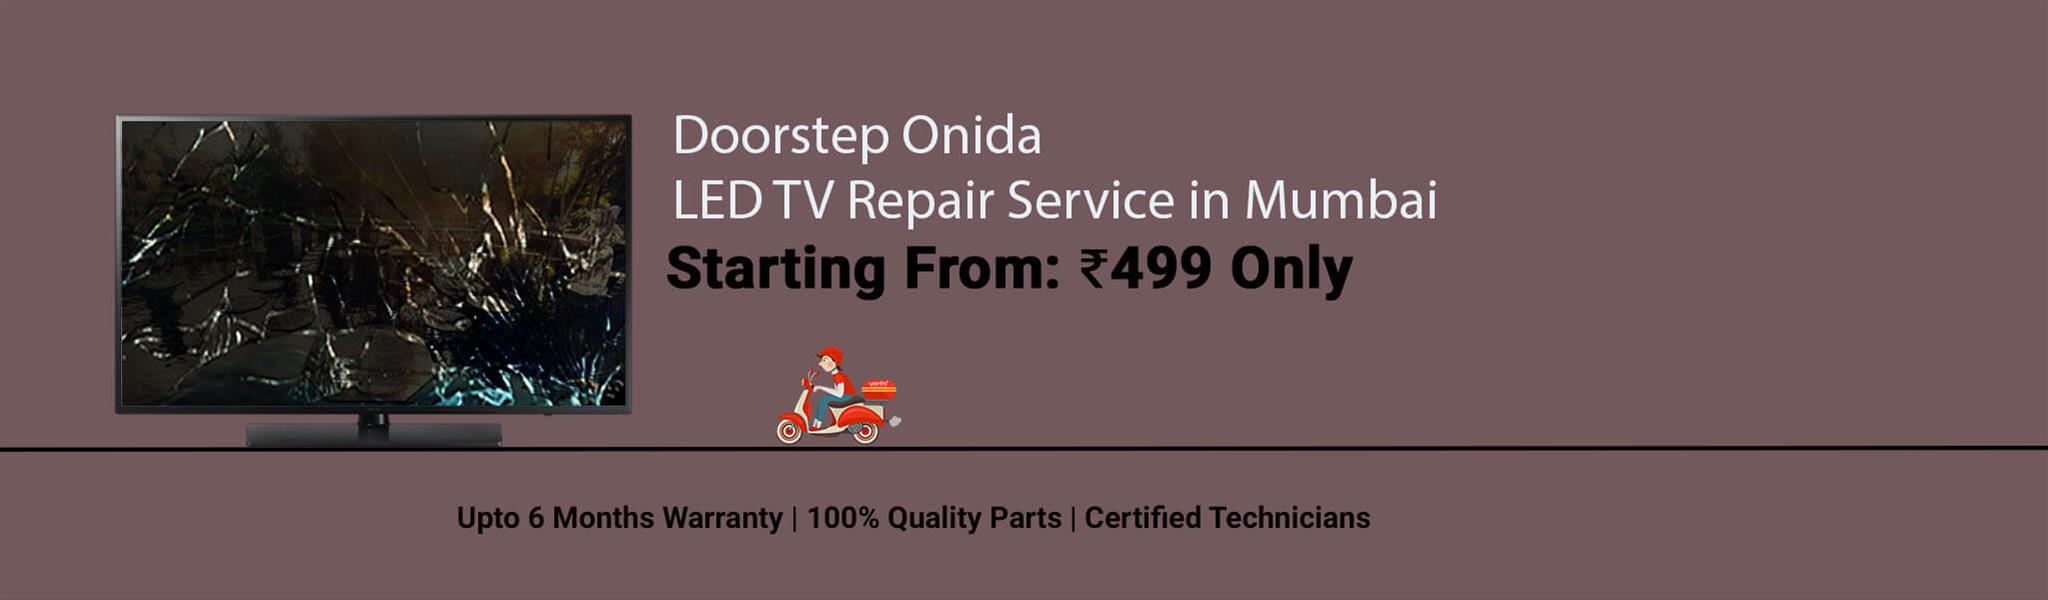 onida-tv-repair-in-mumbai.jpg